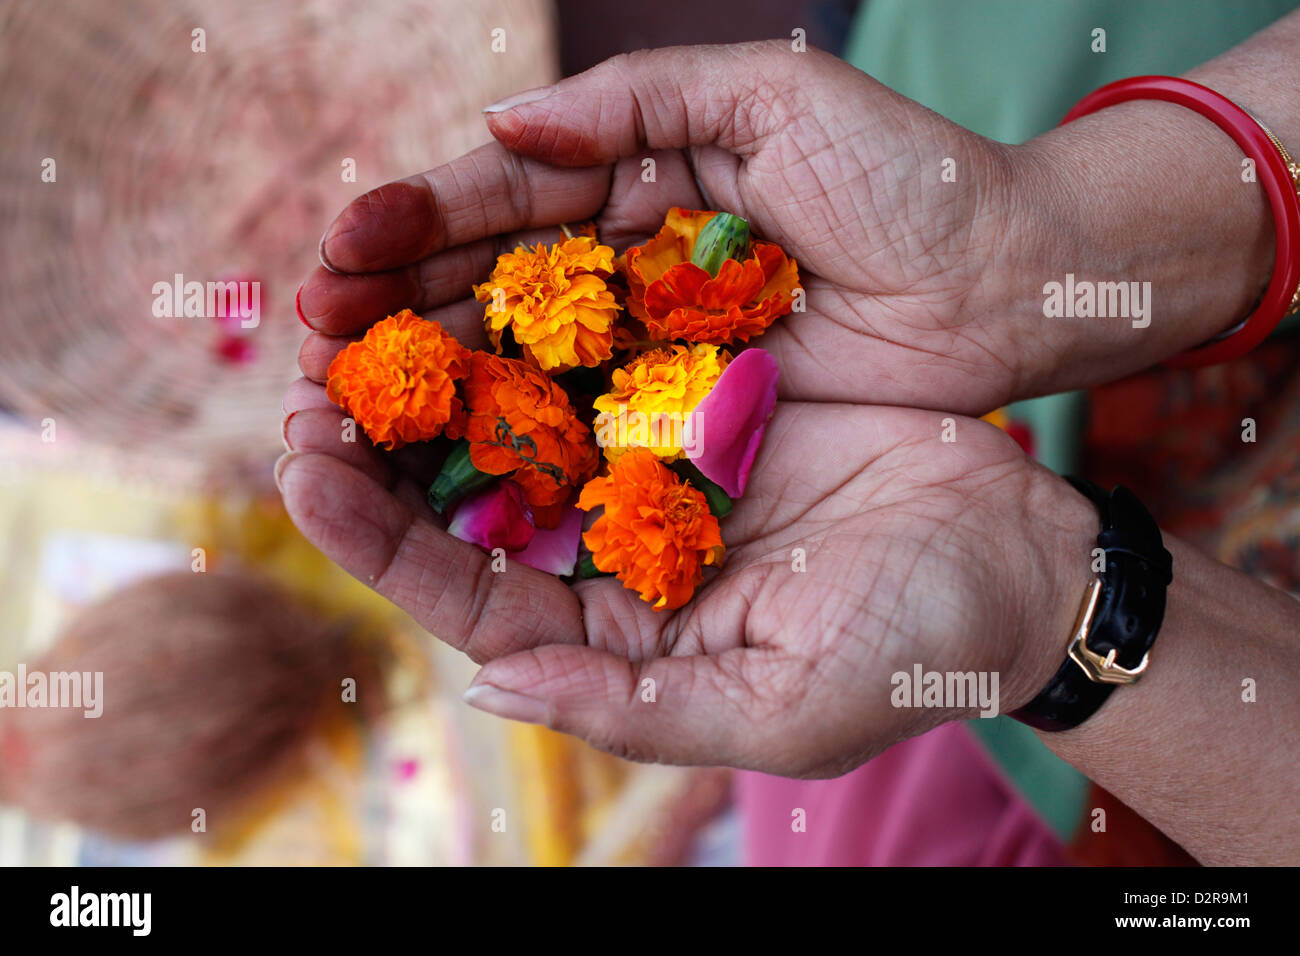 Flower offering during Hindu prayer, Mathura, Uttar Pradesh, India, Asia Stock Photo